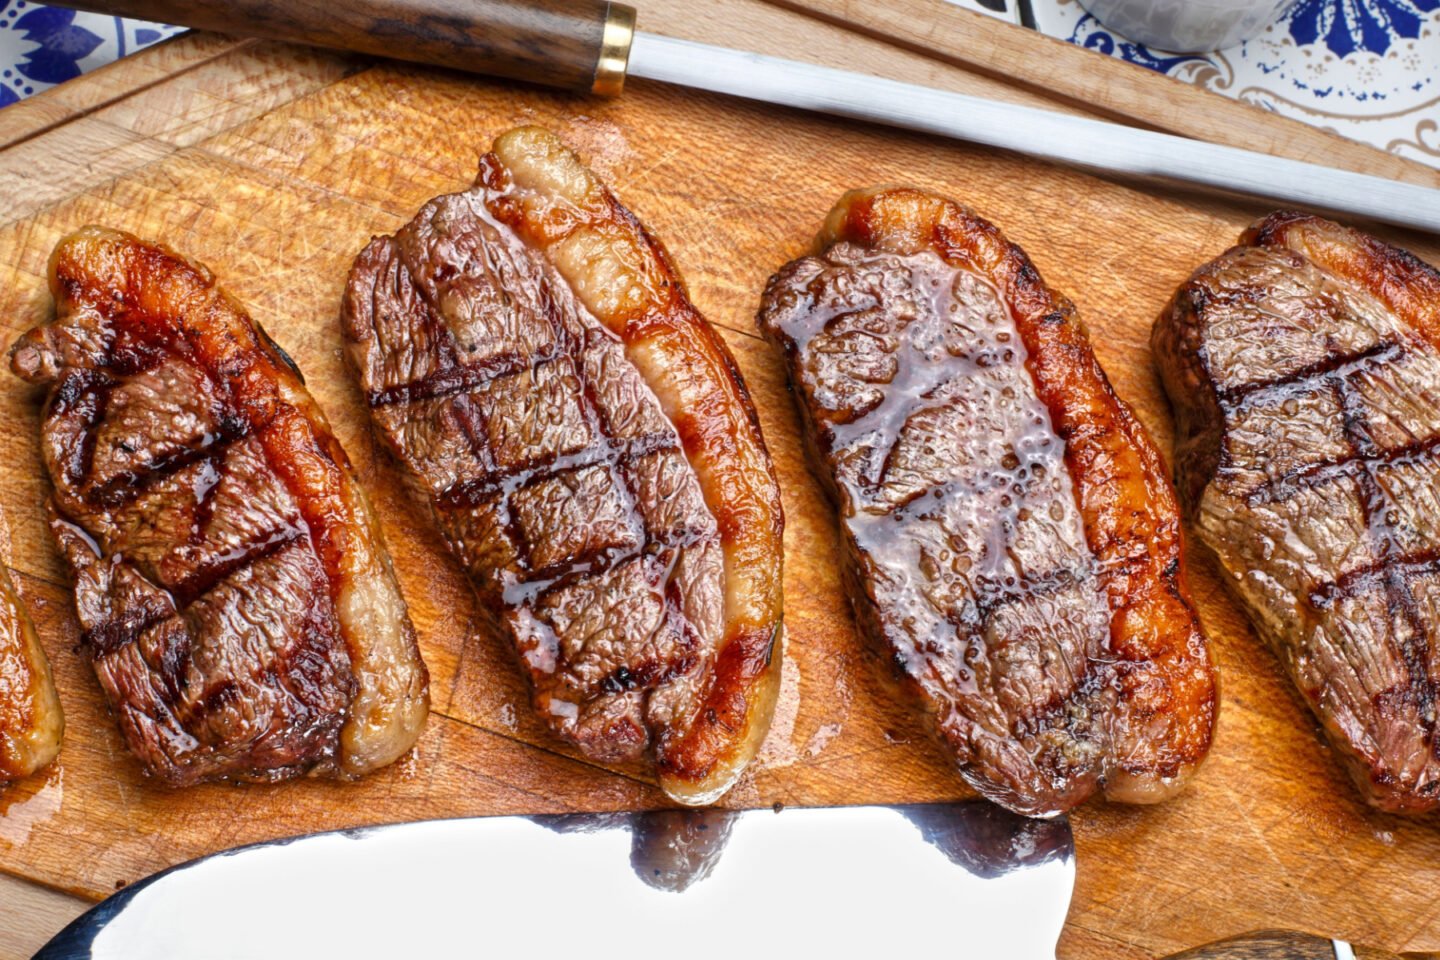 brazilian picanha steaks on a wooden board